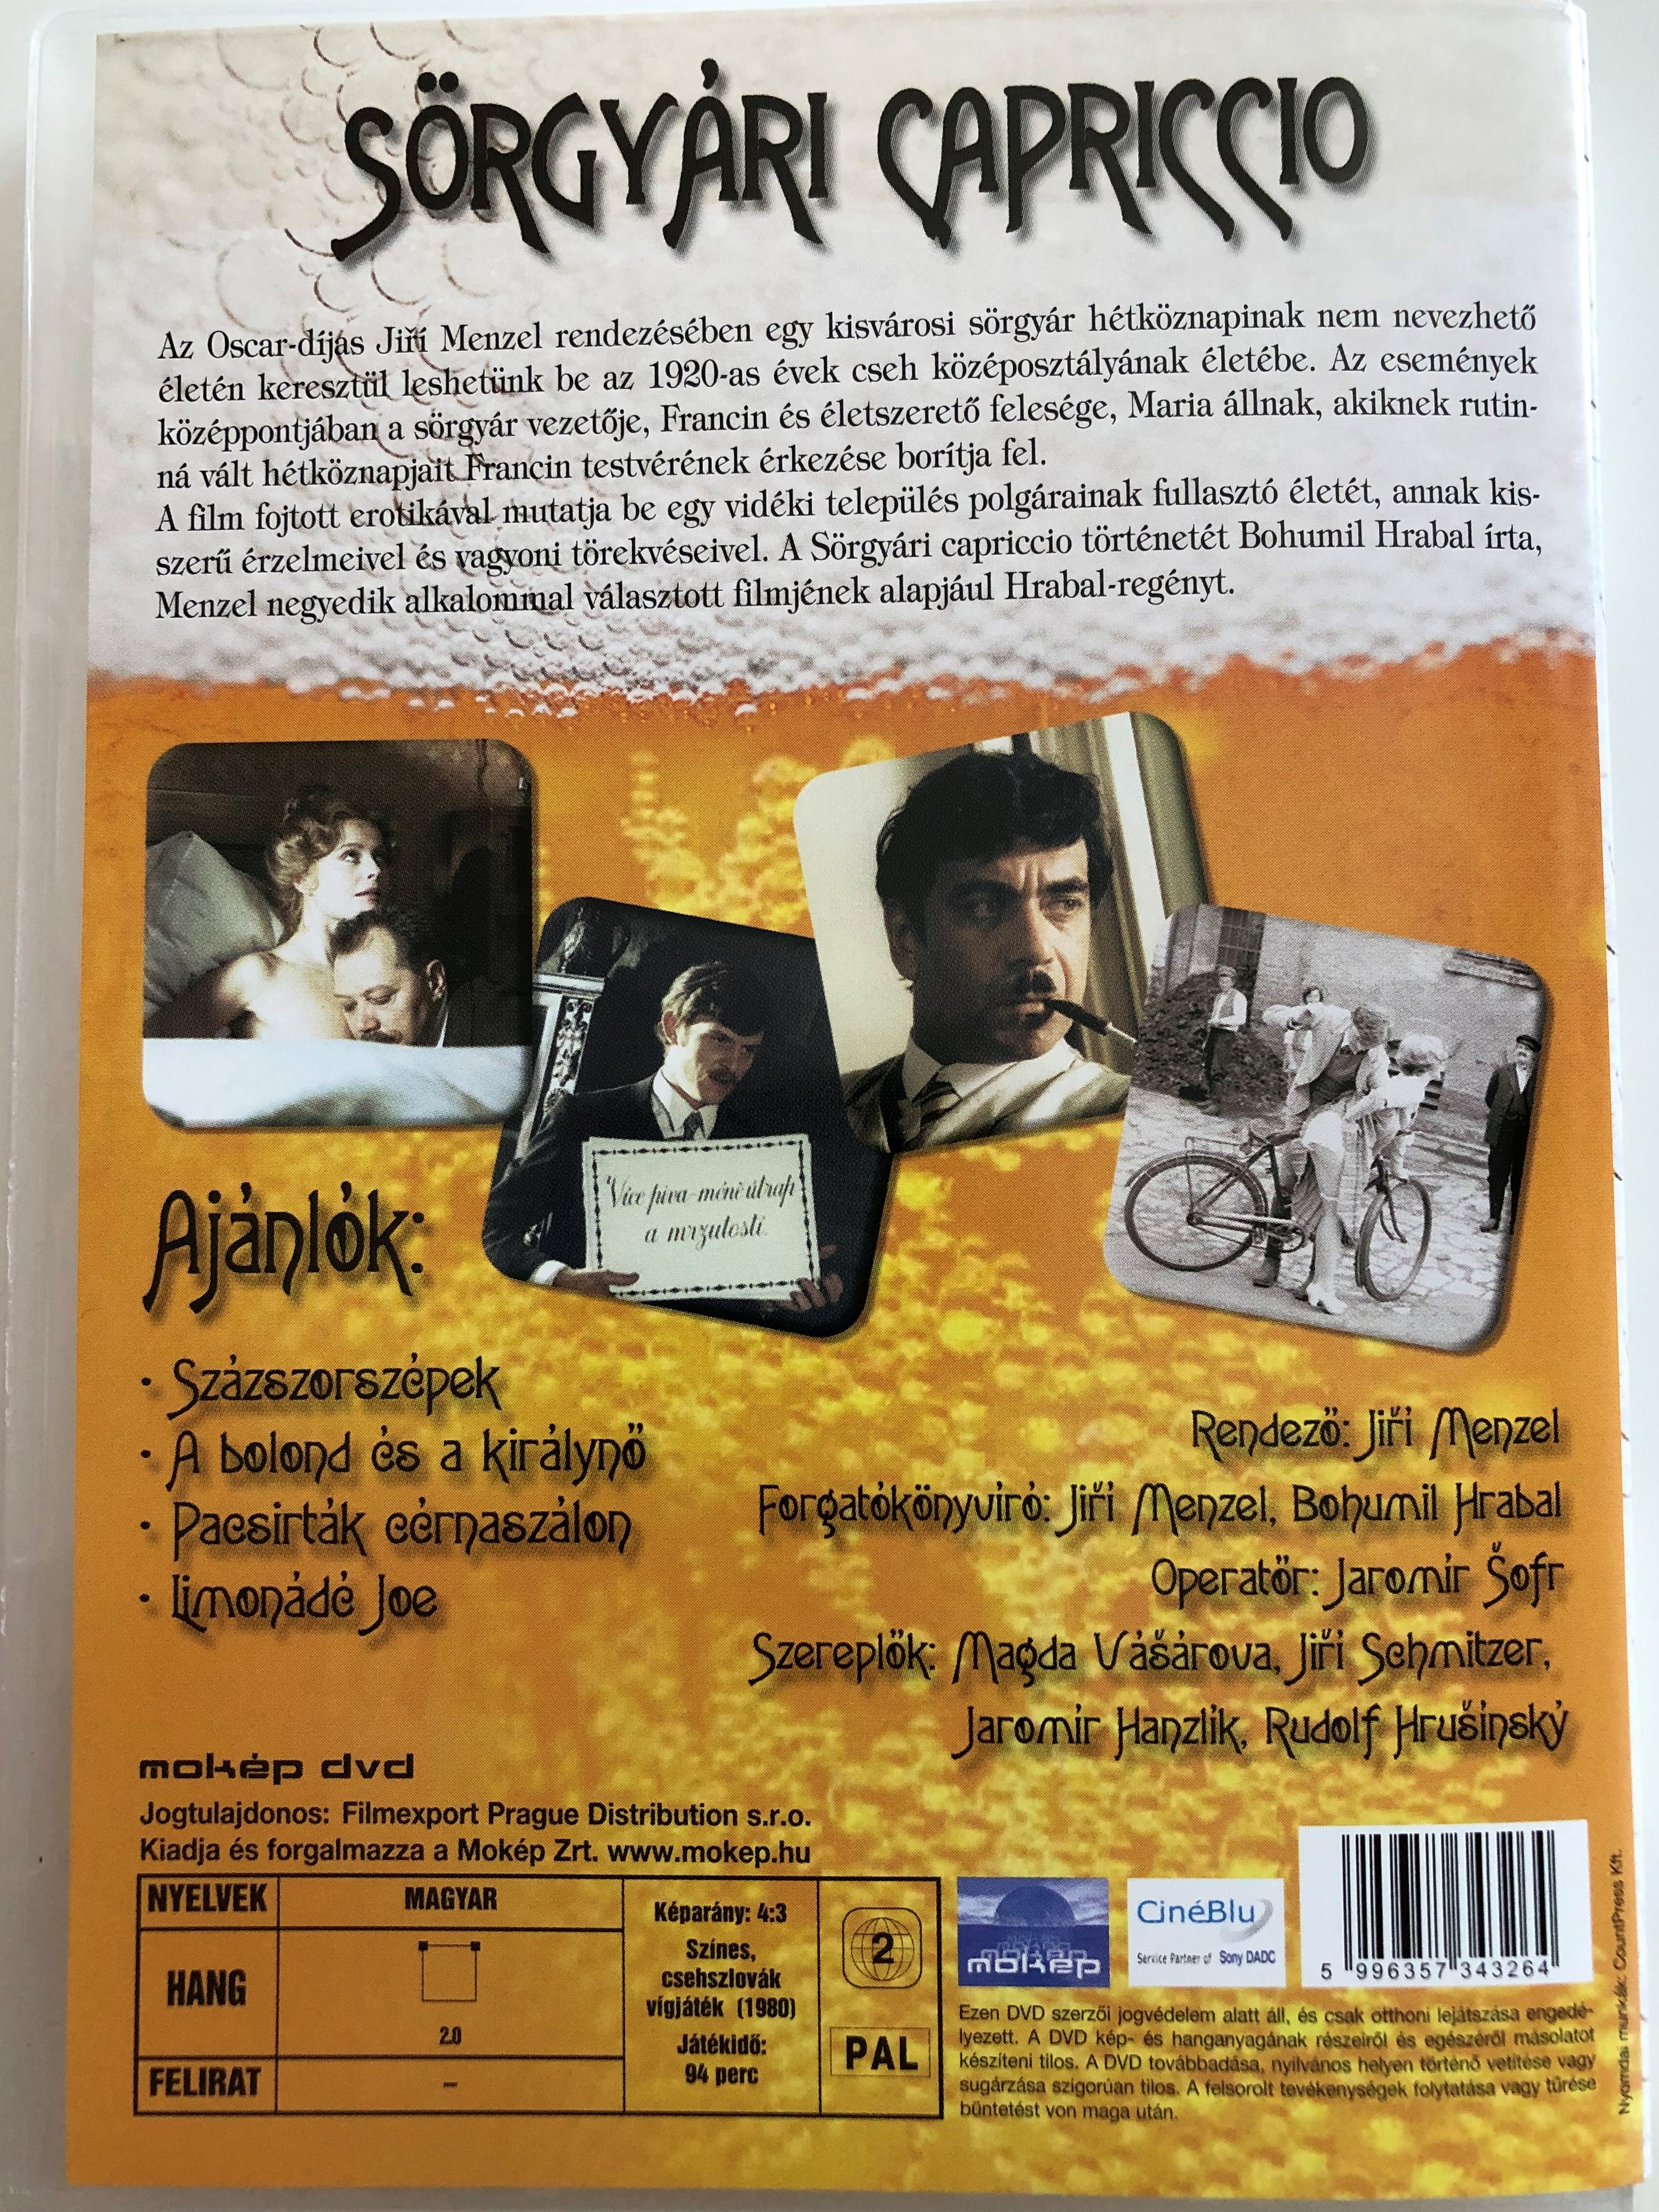 post-i-iny-dvd-1980-s-rgy-ri-capriccio-directed-by-ji-menzel-starring-magda-v-ryov-ji-schmitzer-jarom-r-hanzl-k-rudolf-hru-nsk-based-on-the-novel-by-bohumil-hrabal-2-.jpg